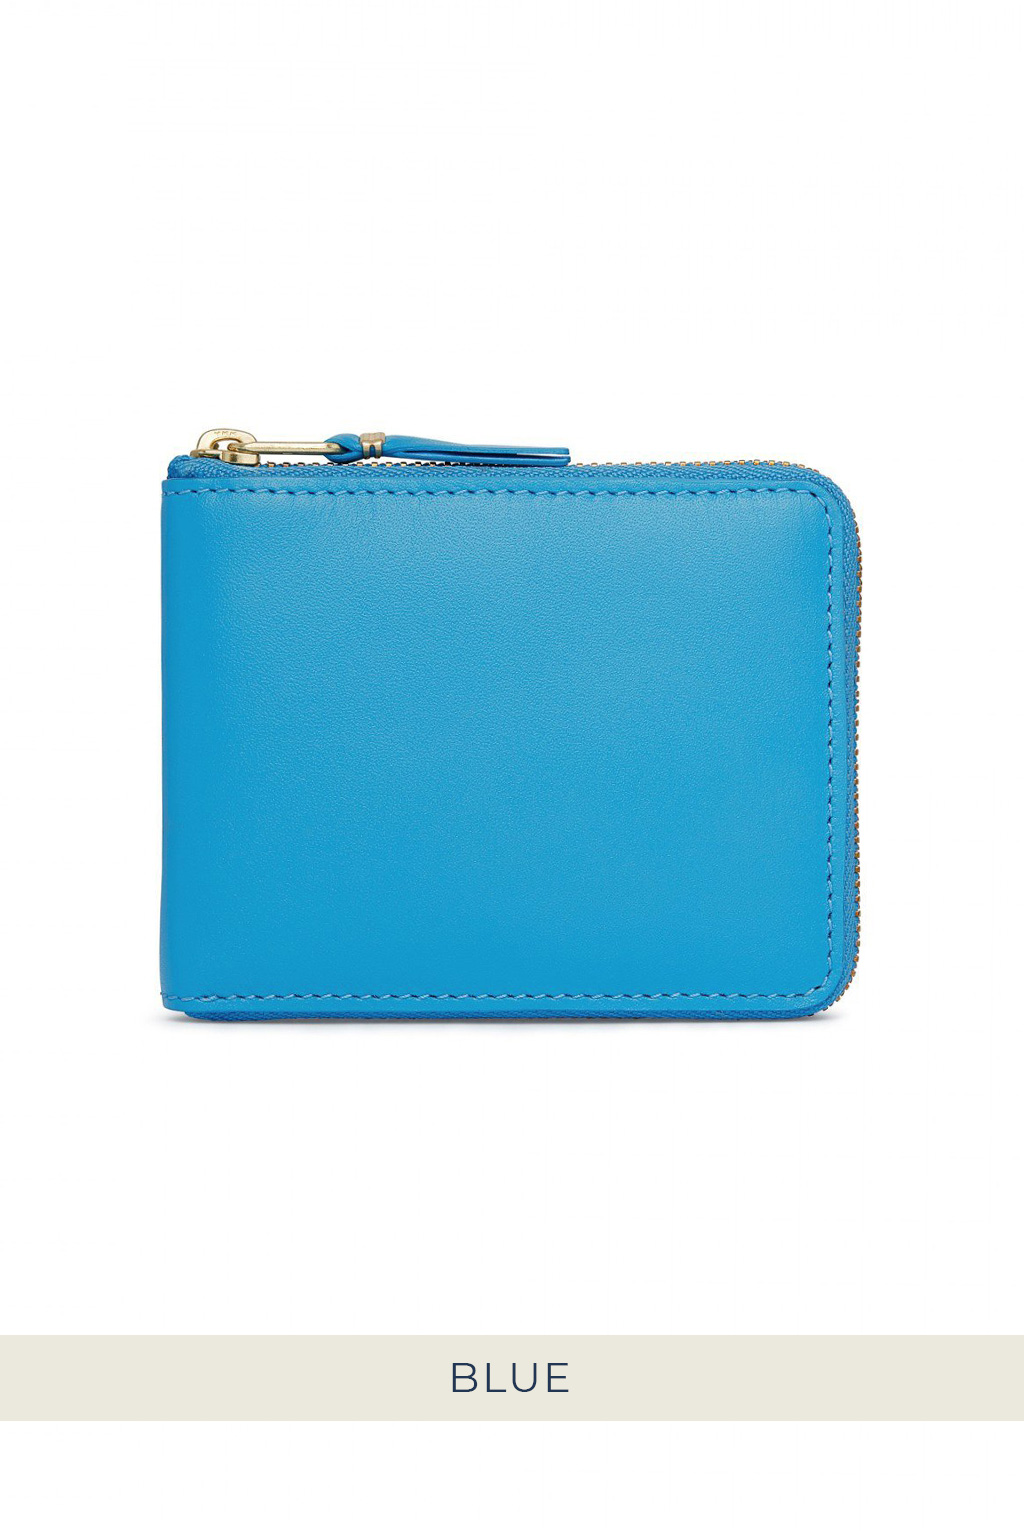 Comme Des Garcons Wallets Classic Leather Zip Around Wallet - 4 Colour Choices